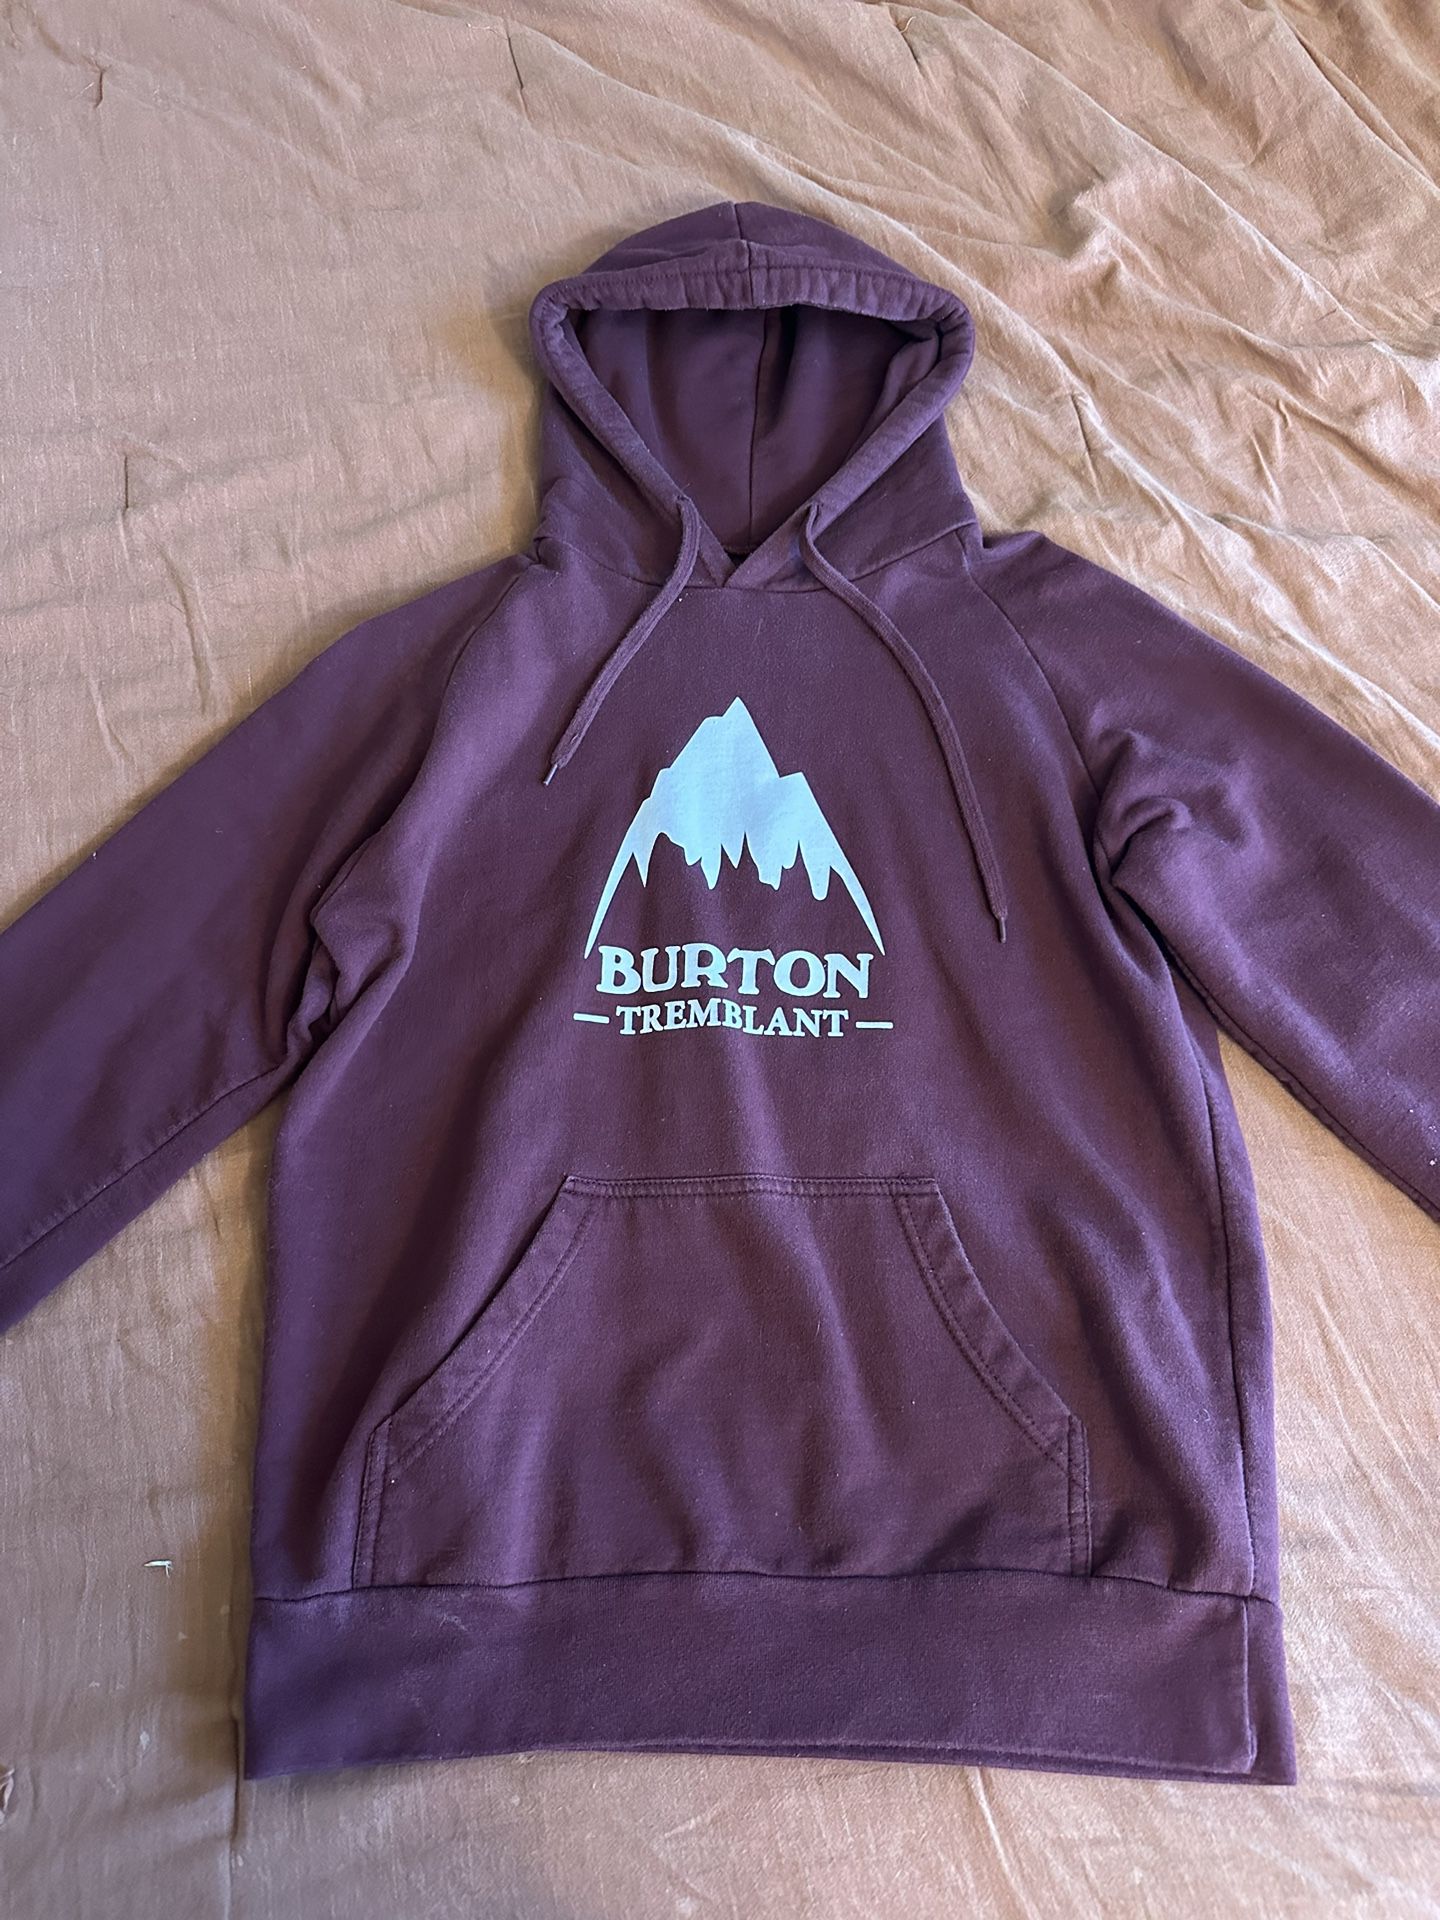 Burton Sweatshirt For Sale